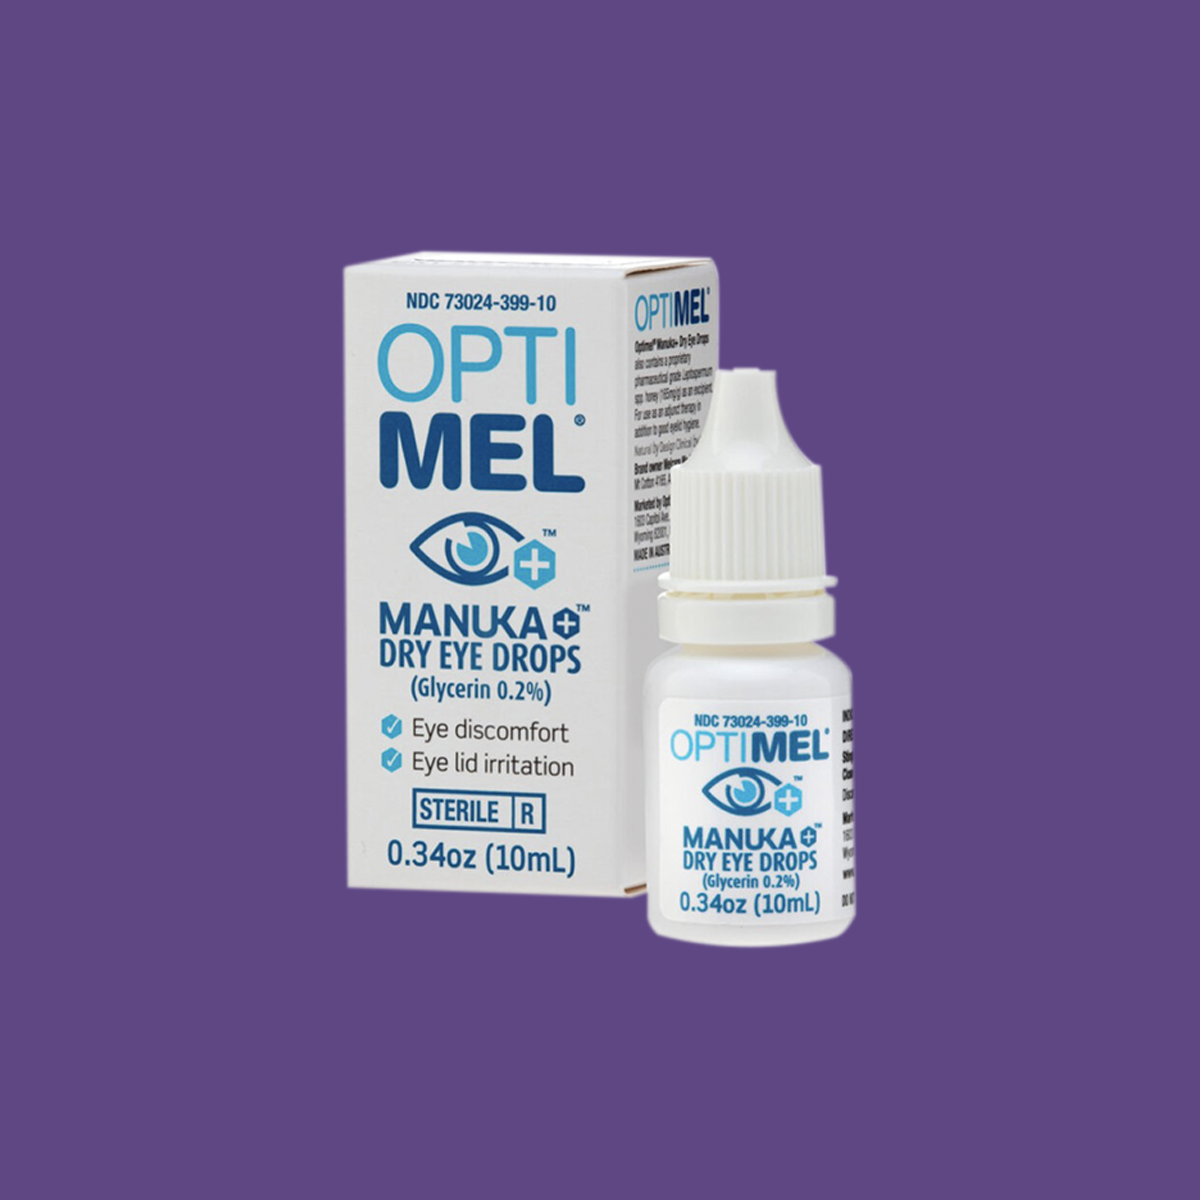 Optimel Manuka Dry Eye Drops 0.2 %, 0.34 oz (10mL Bottle)